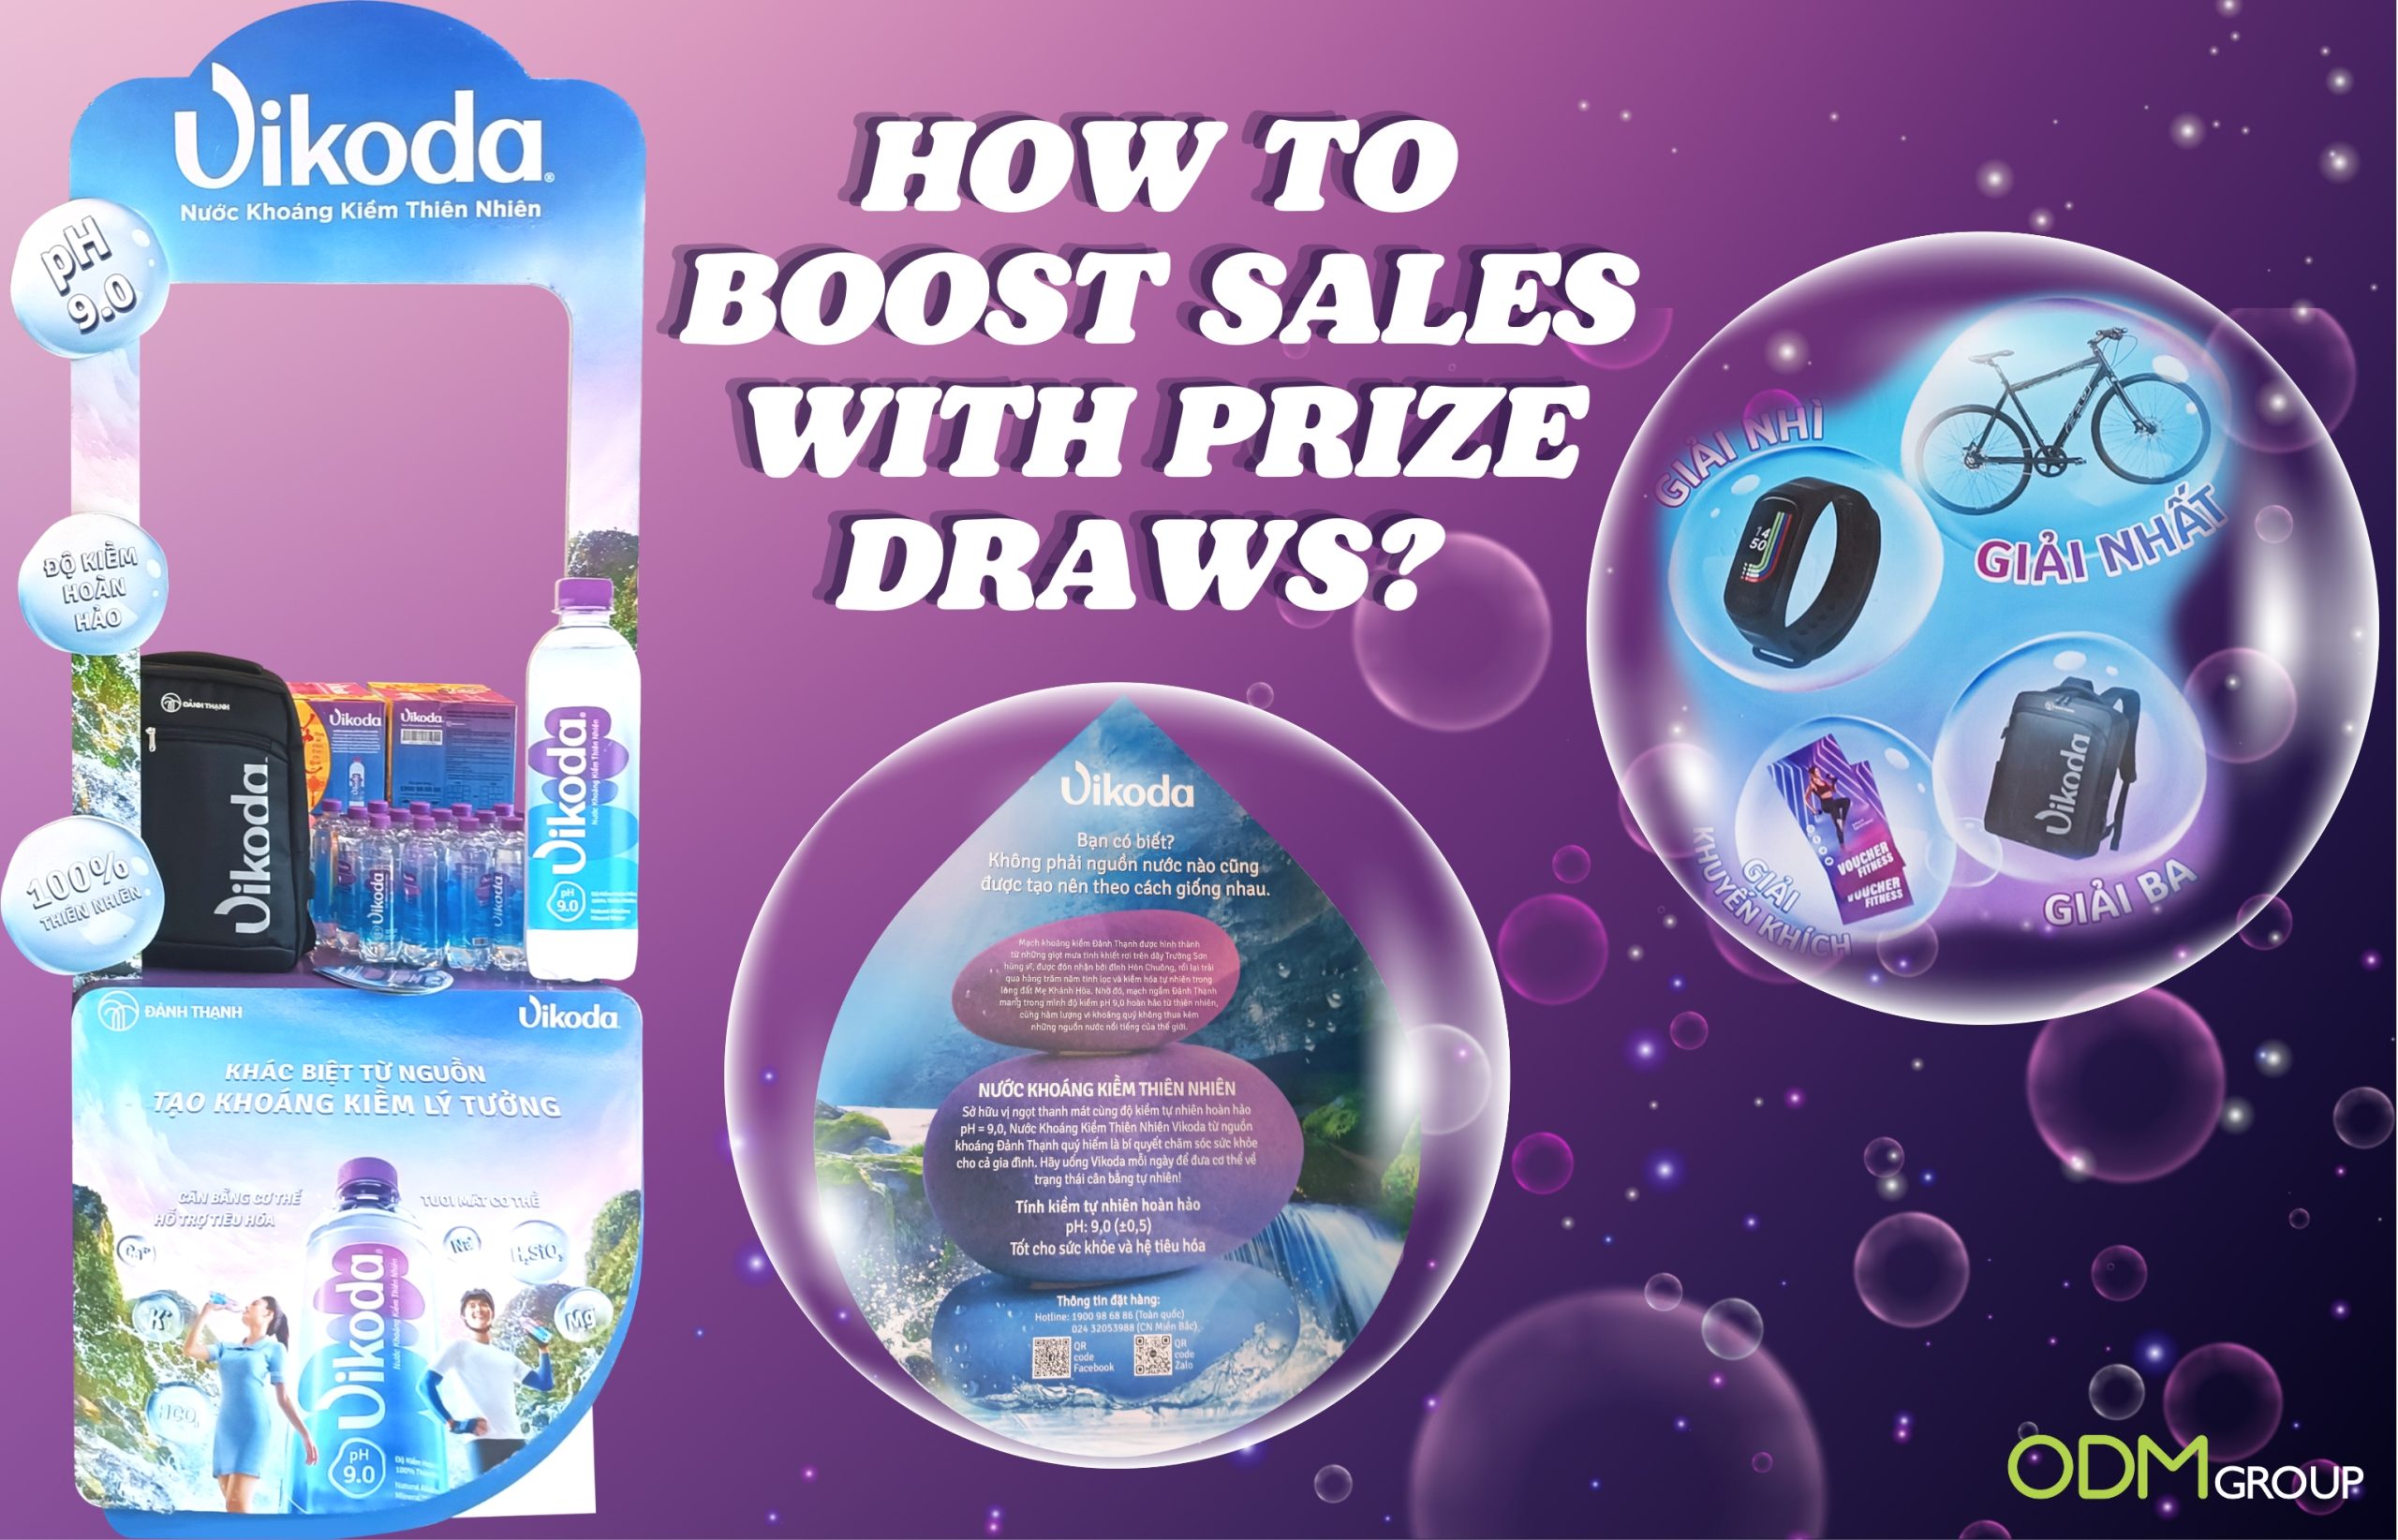 Vikoda Prize Draw Promotion